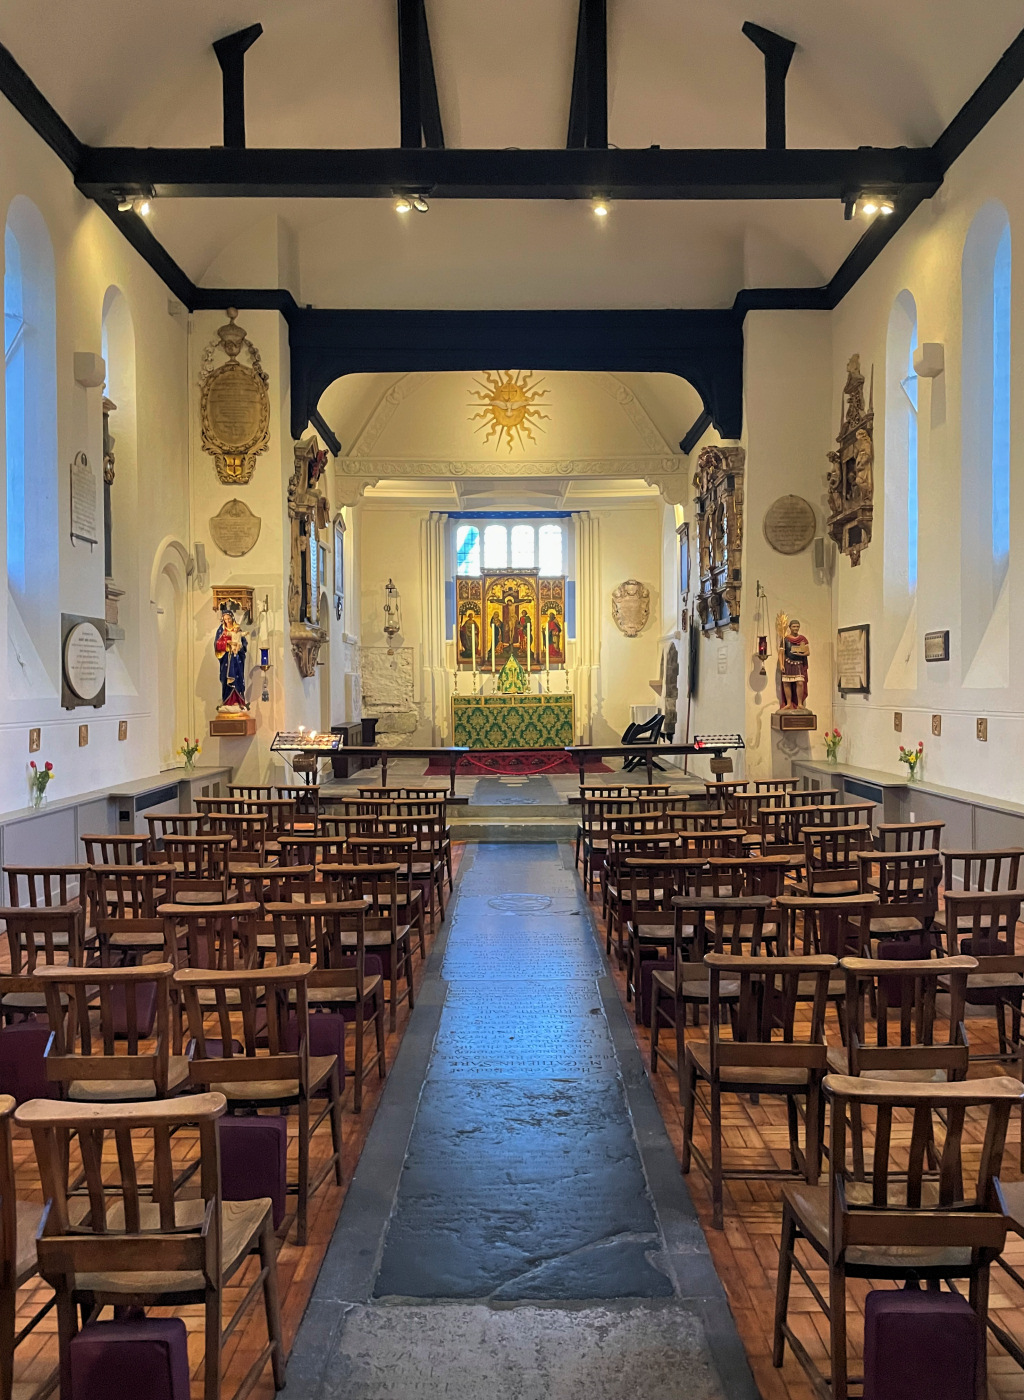 St Pancras Old Church interior